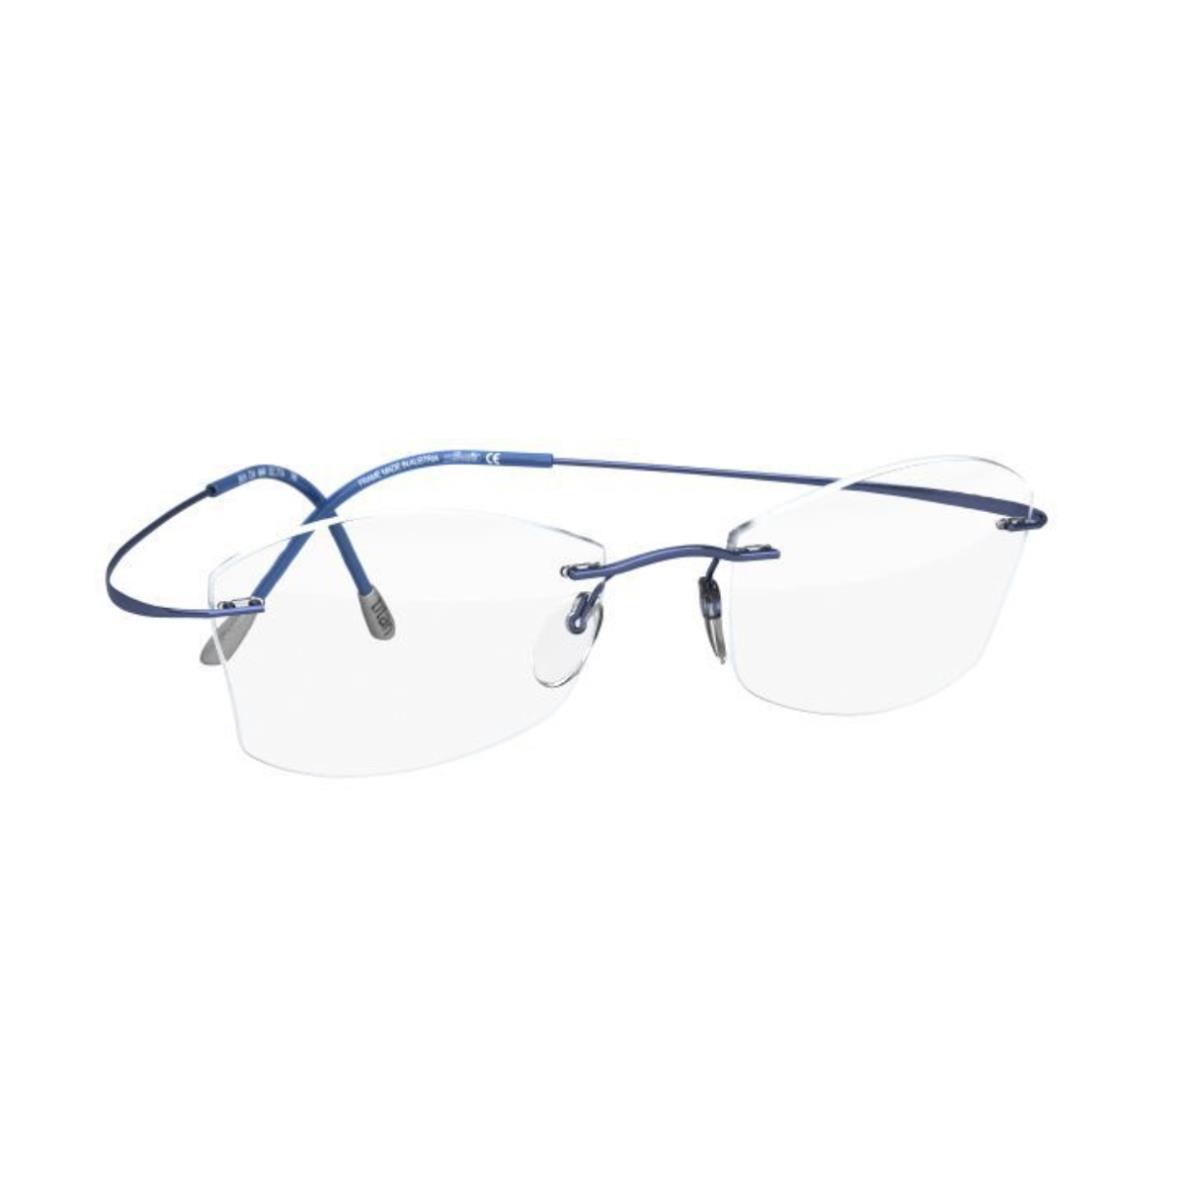 Silhouette Rimless Eyeglasses Titan Minimal Art The Must Collection Frames INDIGO BLUE - 4640, SIZE: 52-17 140, SHAPE - CW